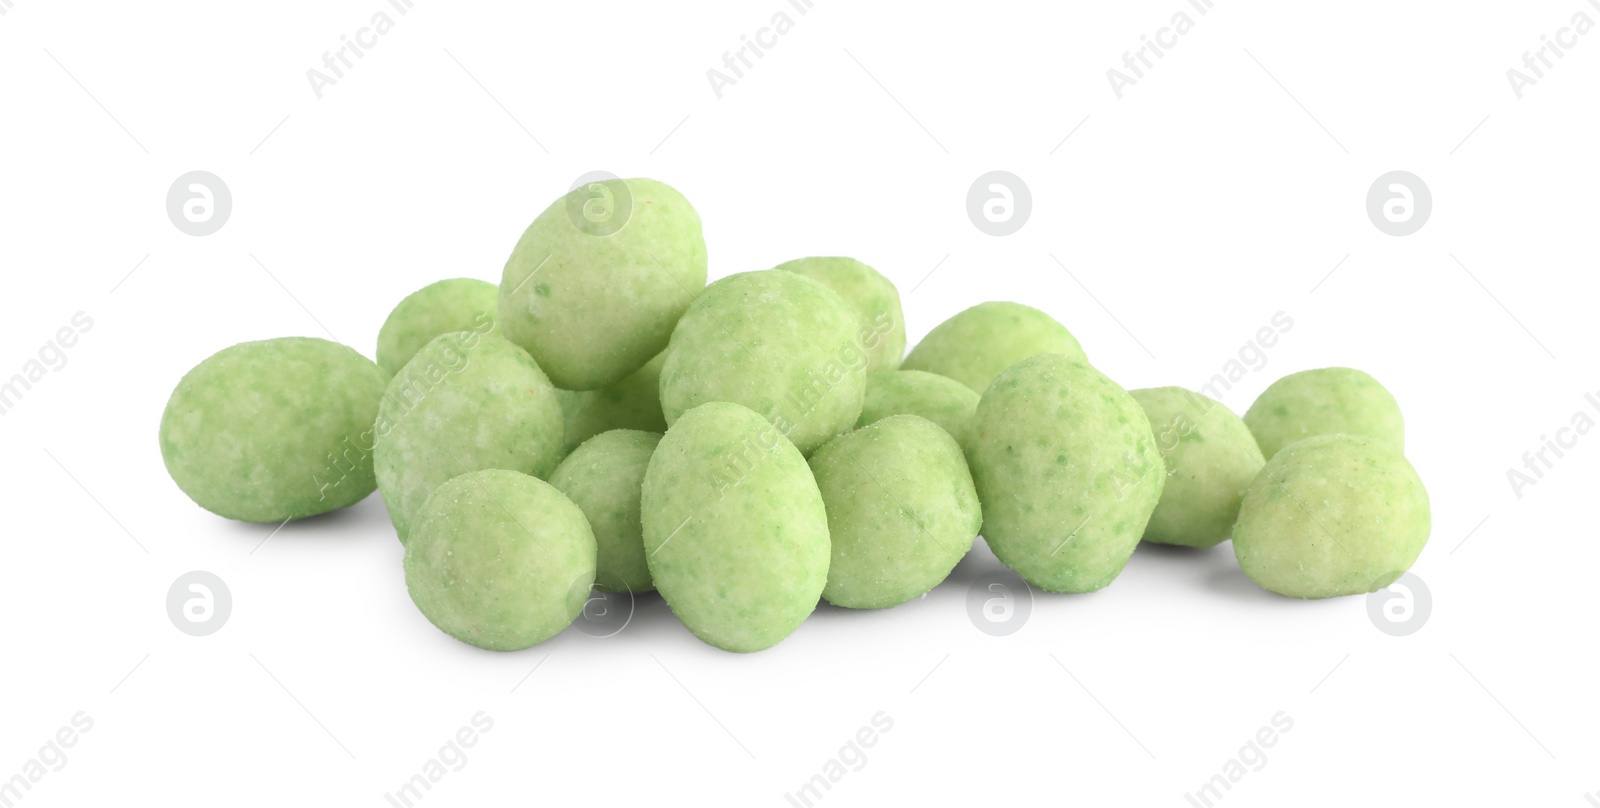 Photo of Pile of wasabi coated peanuts on white background